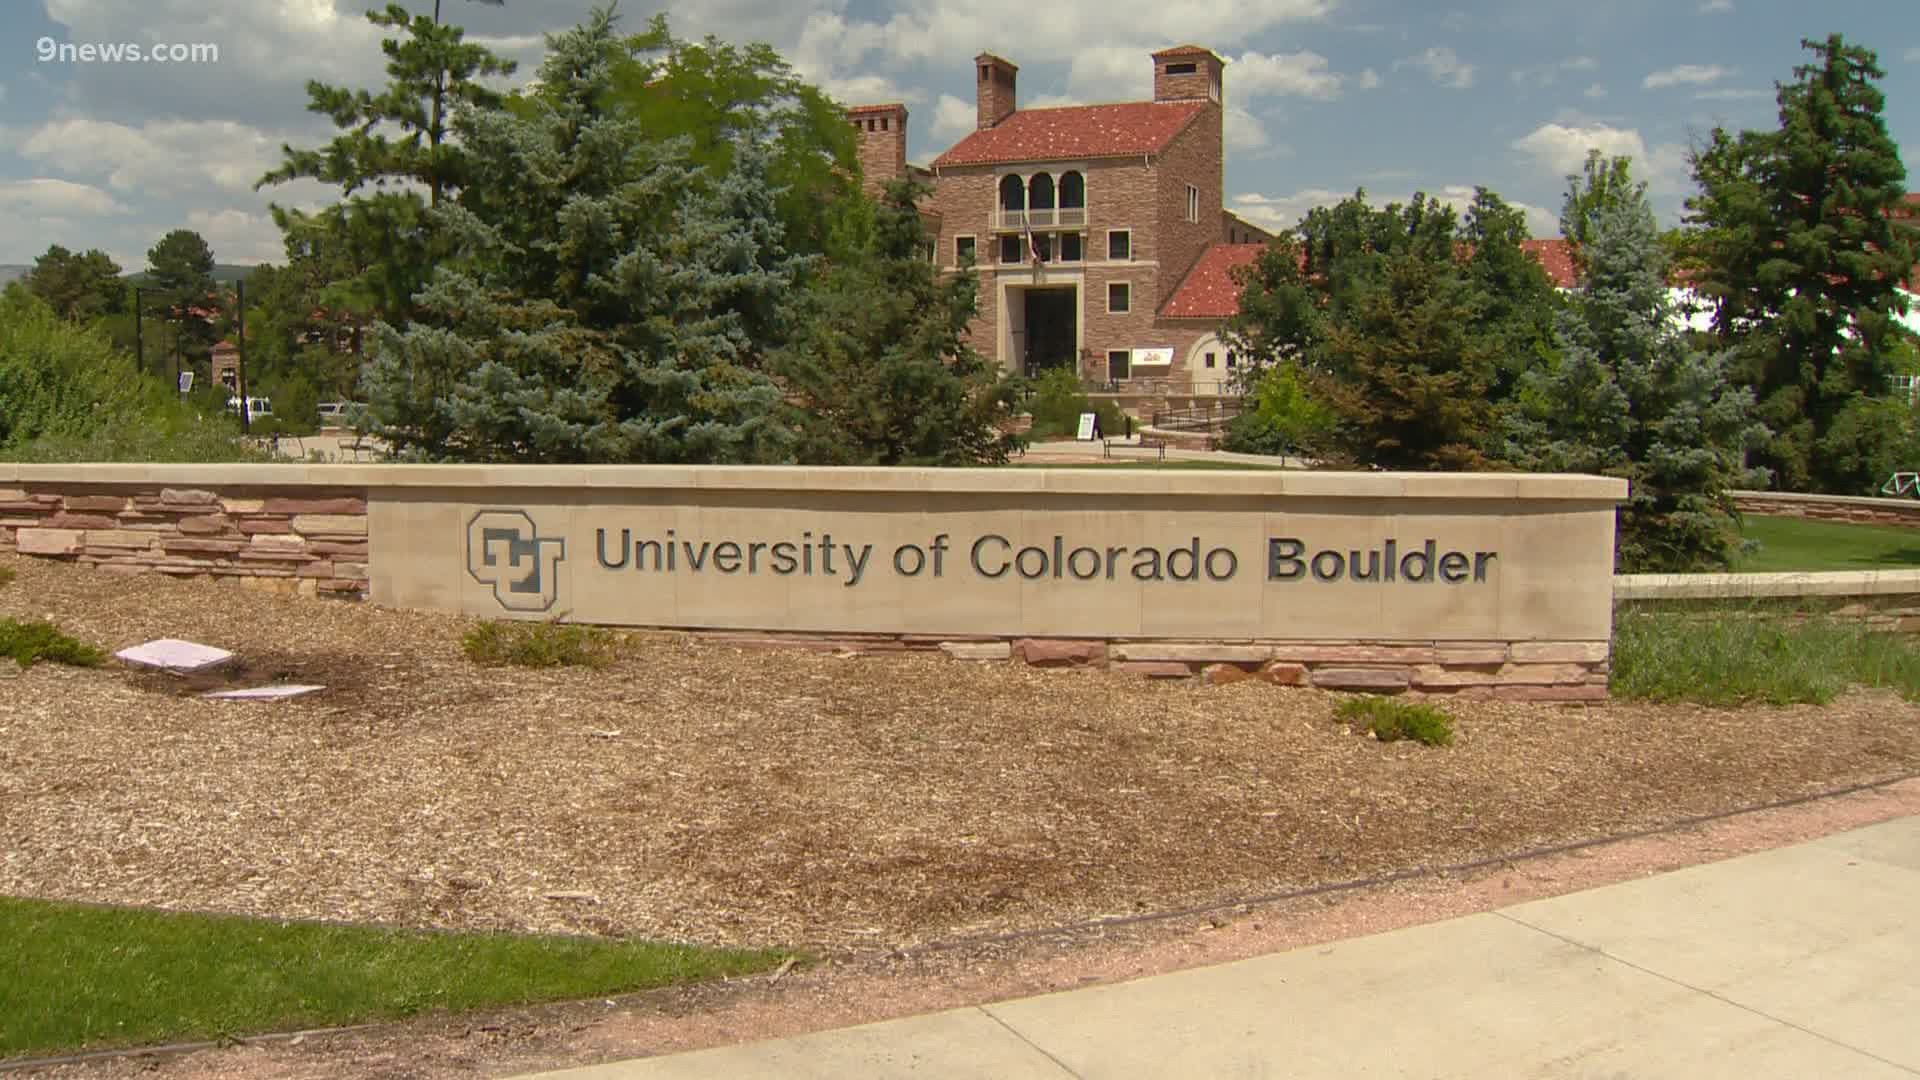 CU Boulder sees enrollments decline